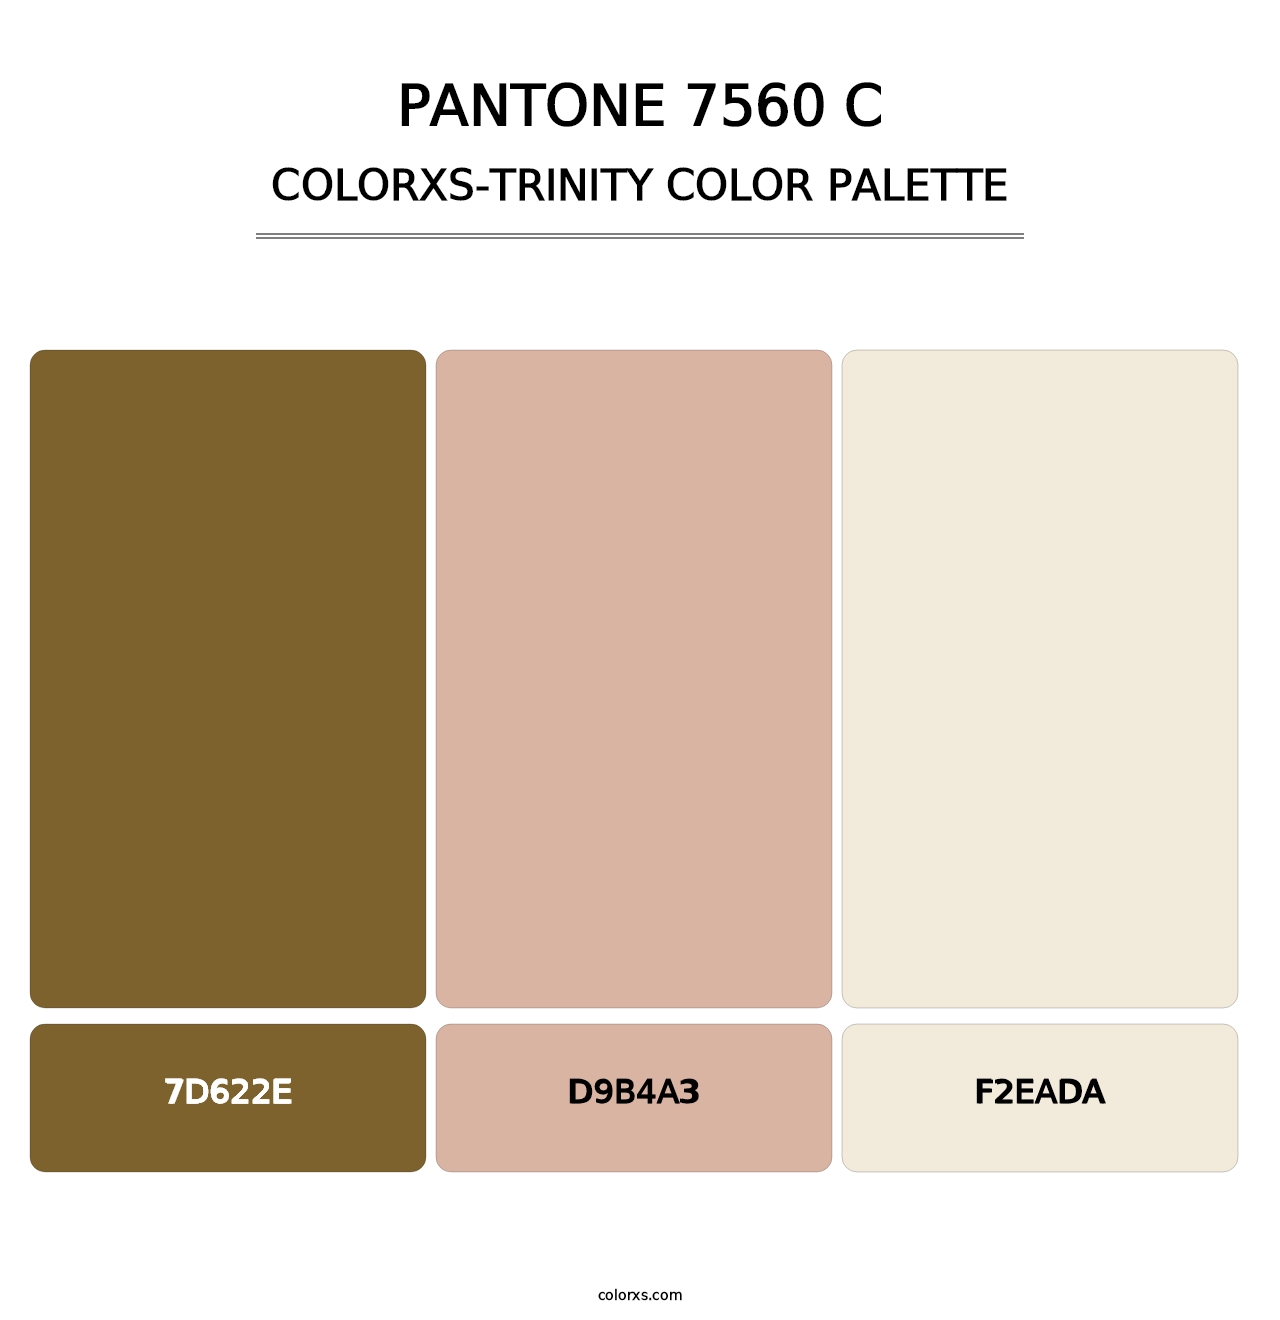 PANTONE 7560 C - Colorxs Trinity Palette